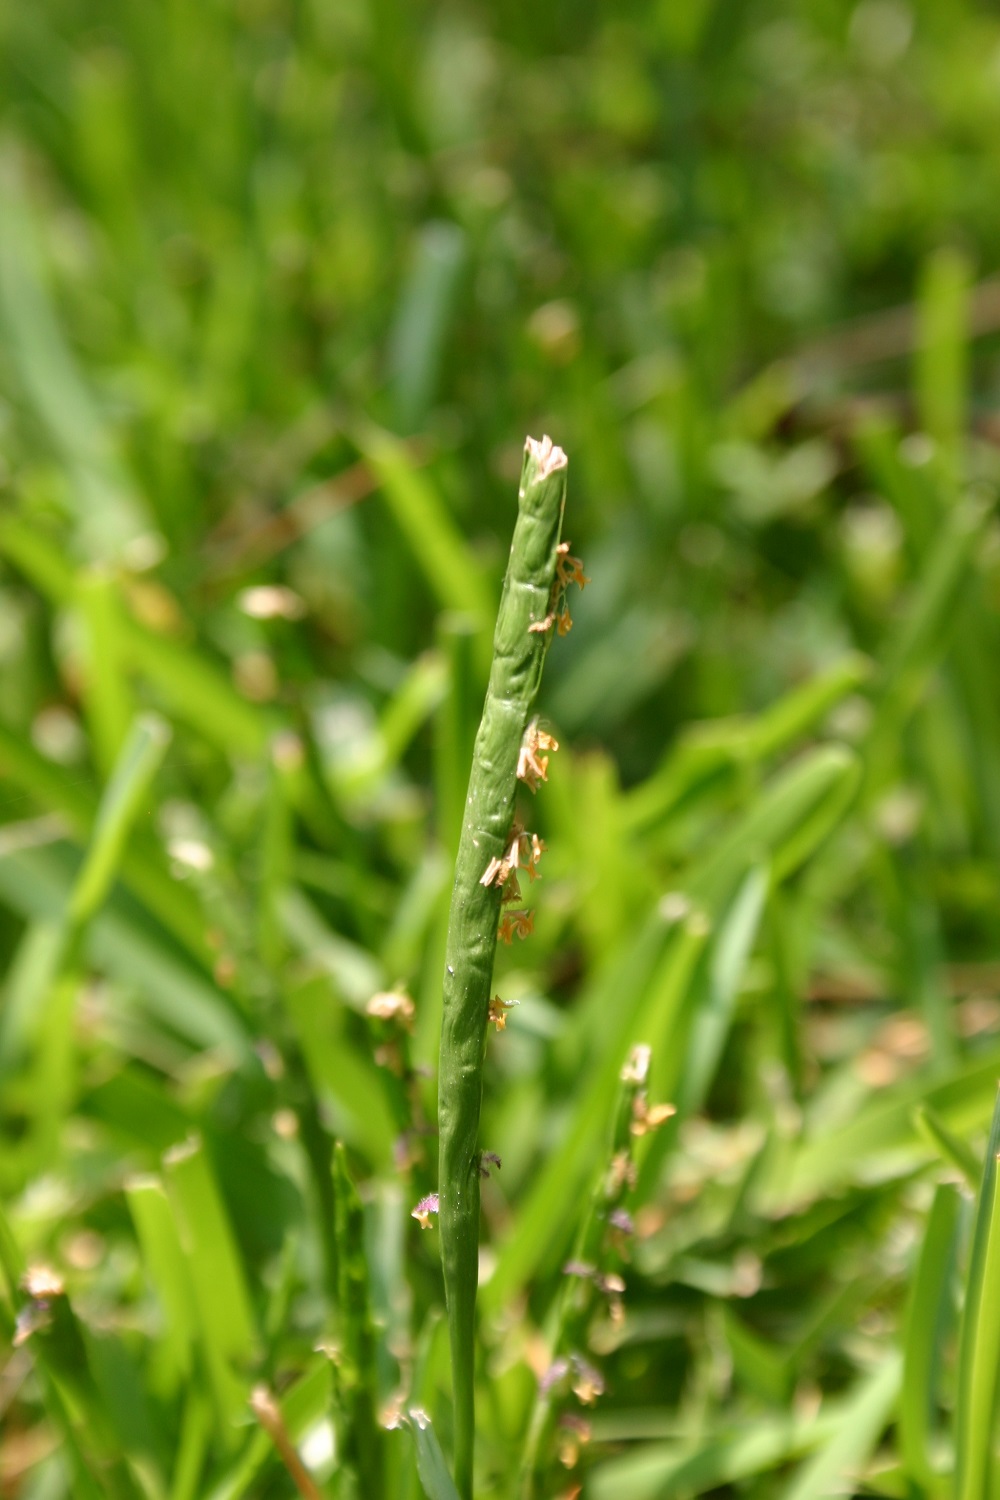 centipedegrass vs st. augustine grass | walter reeves: the georgia